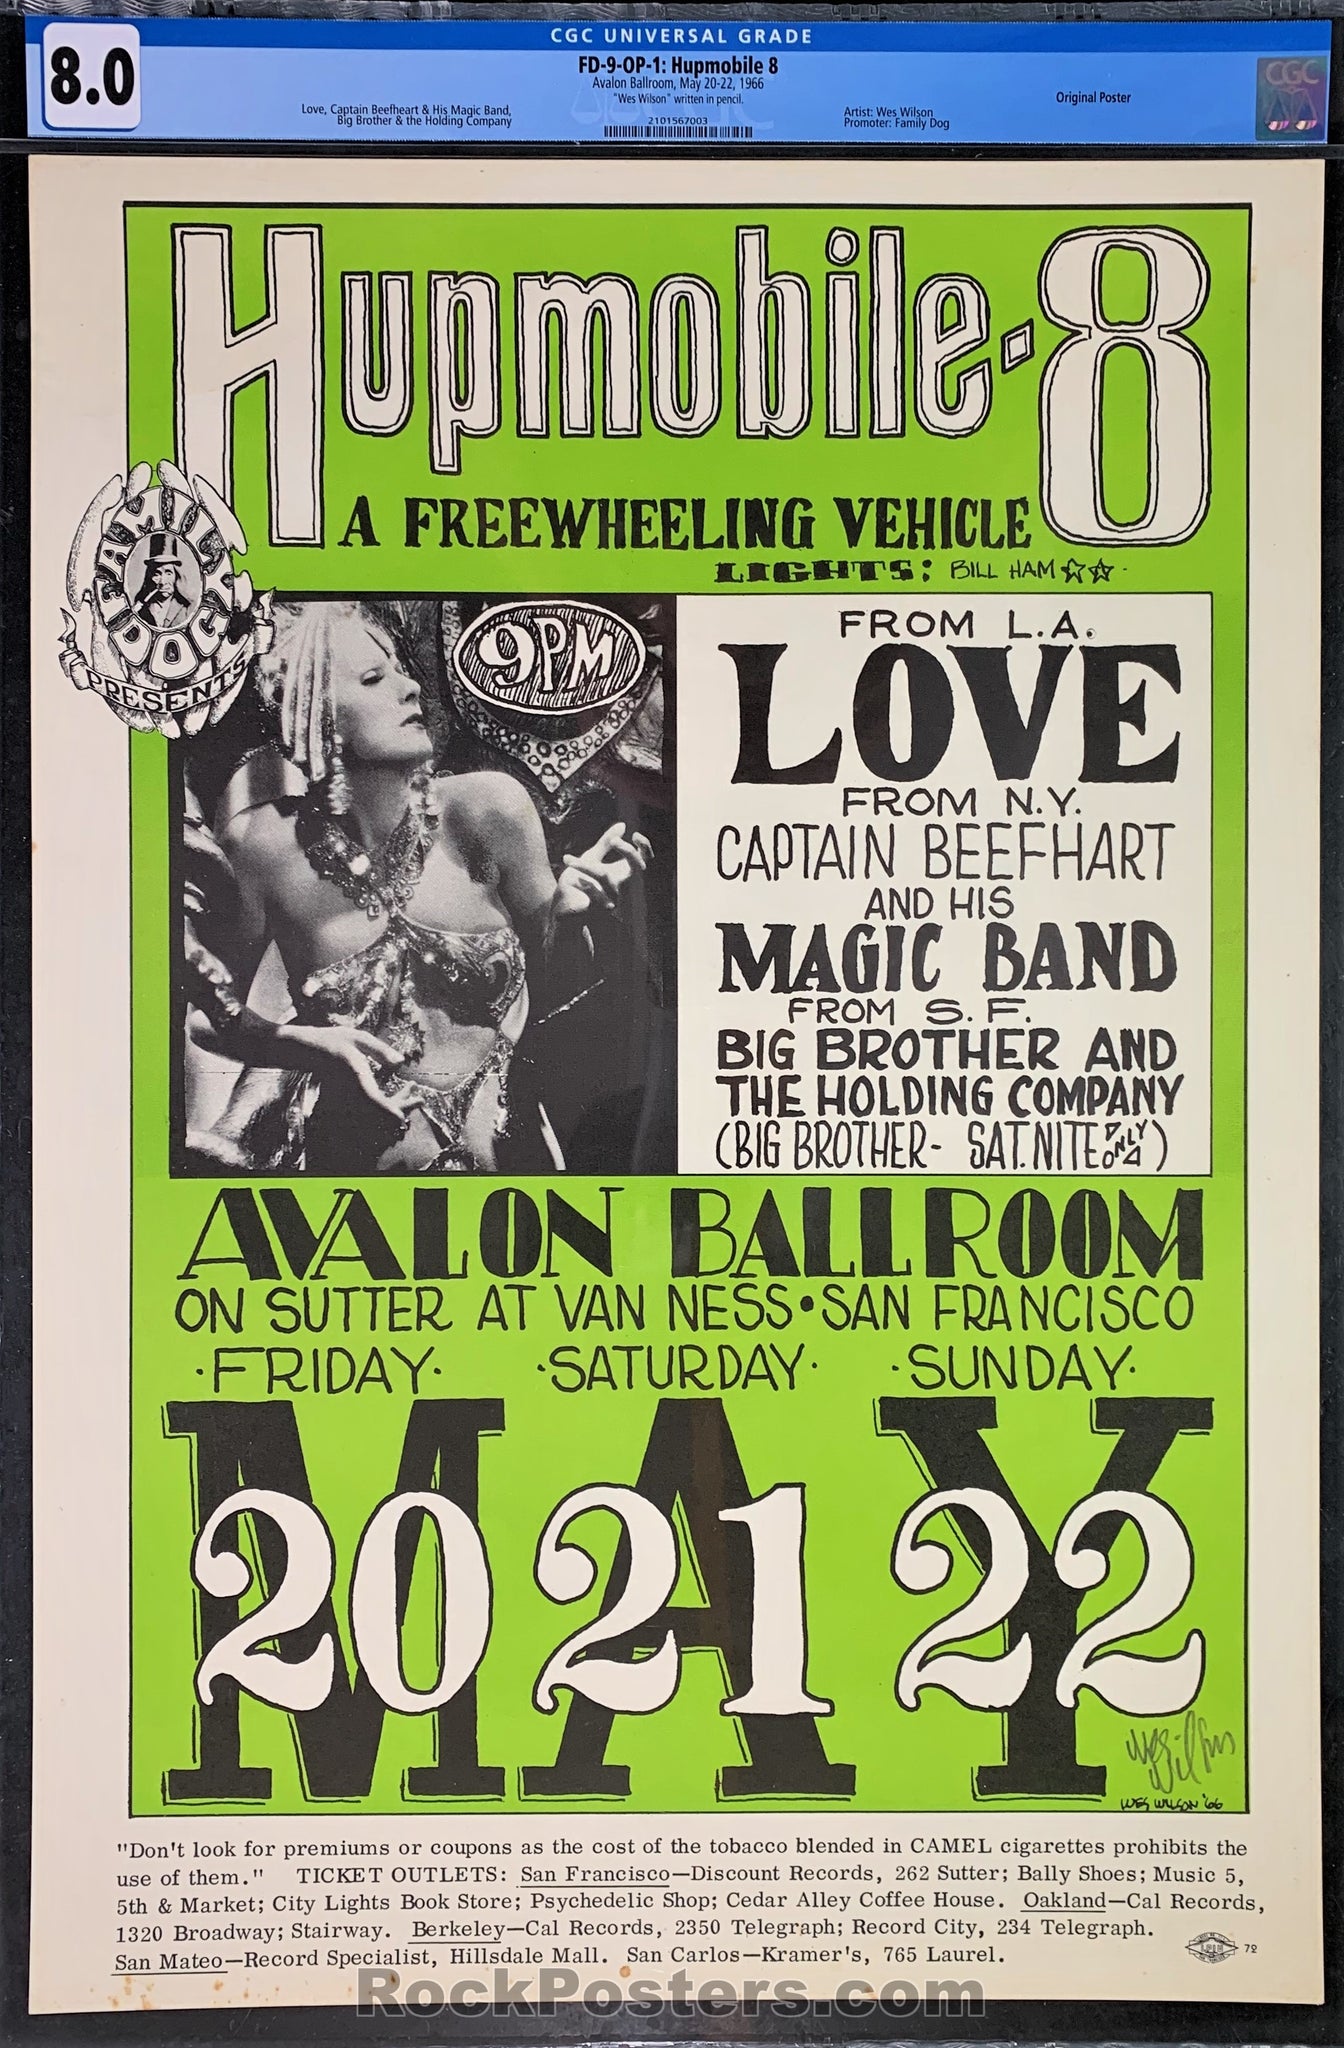 AUCTION -  FD-9 - Beefheart Love - 1966  Poster - Wes Wilson Signed - Avalon Ballroom - CGC Graded 8.0